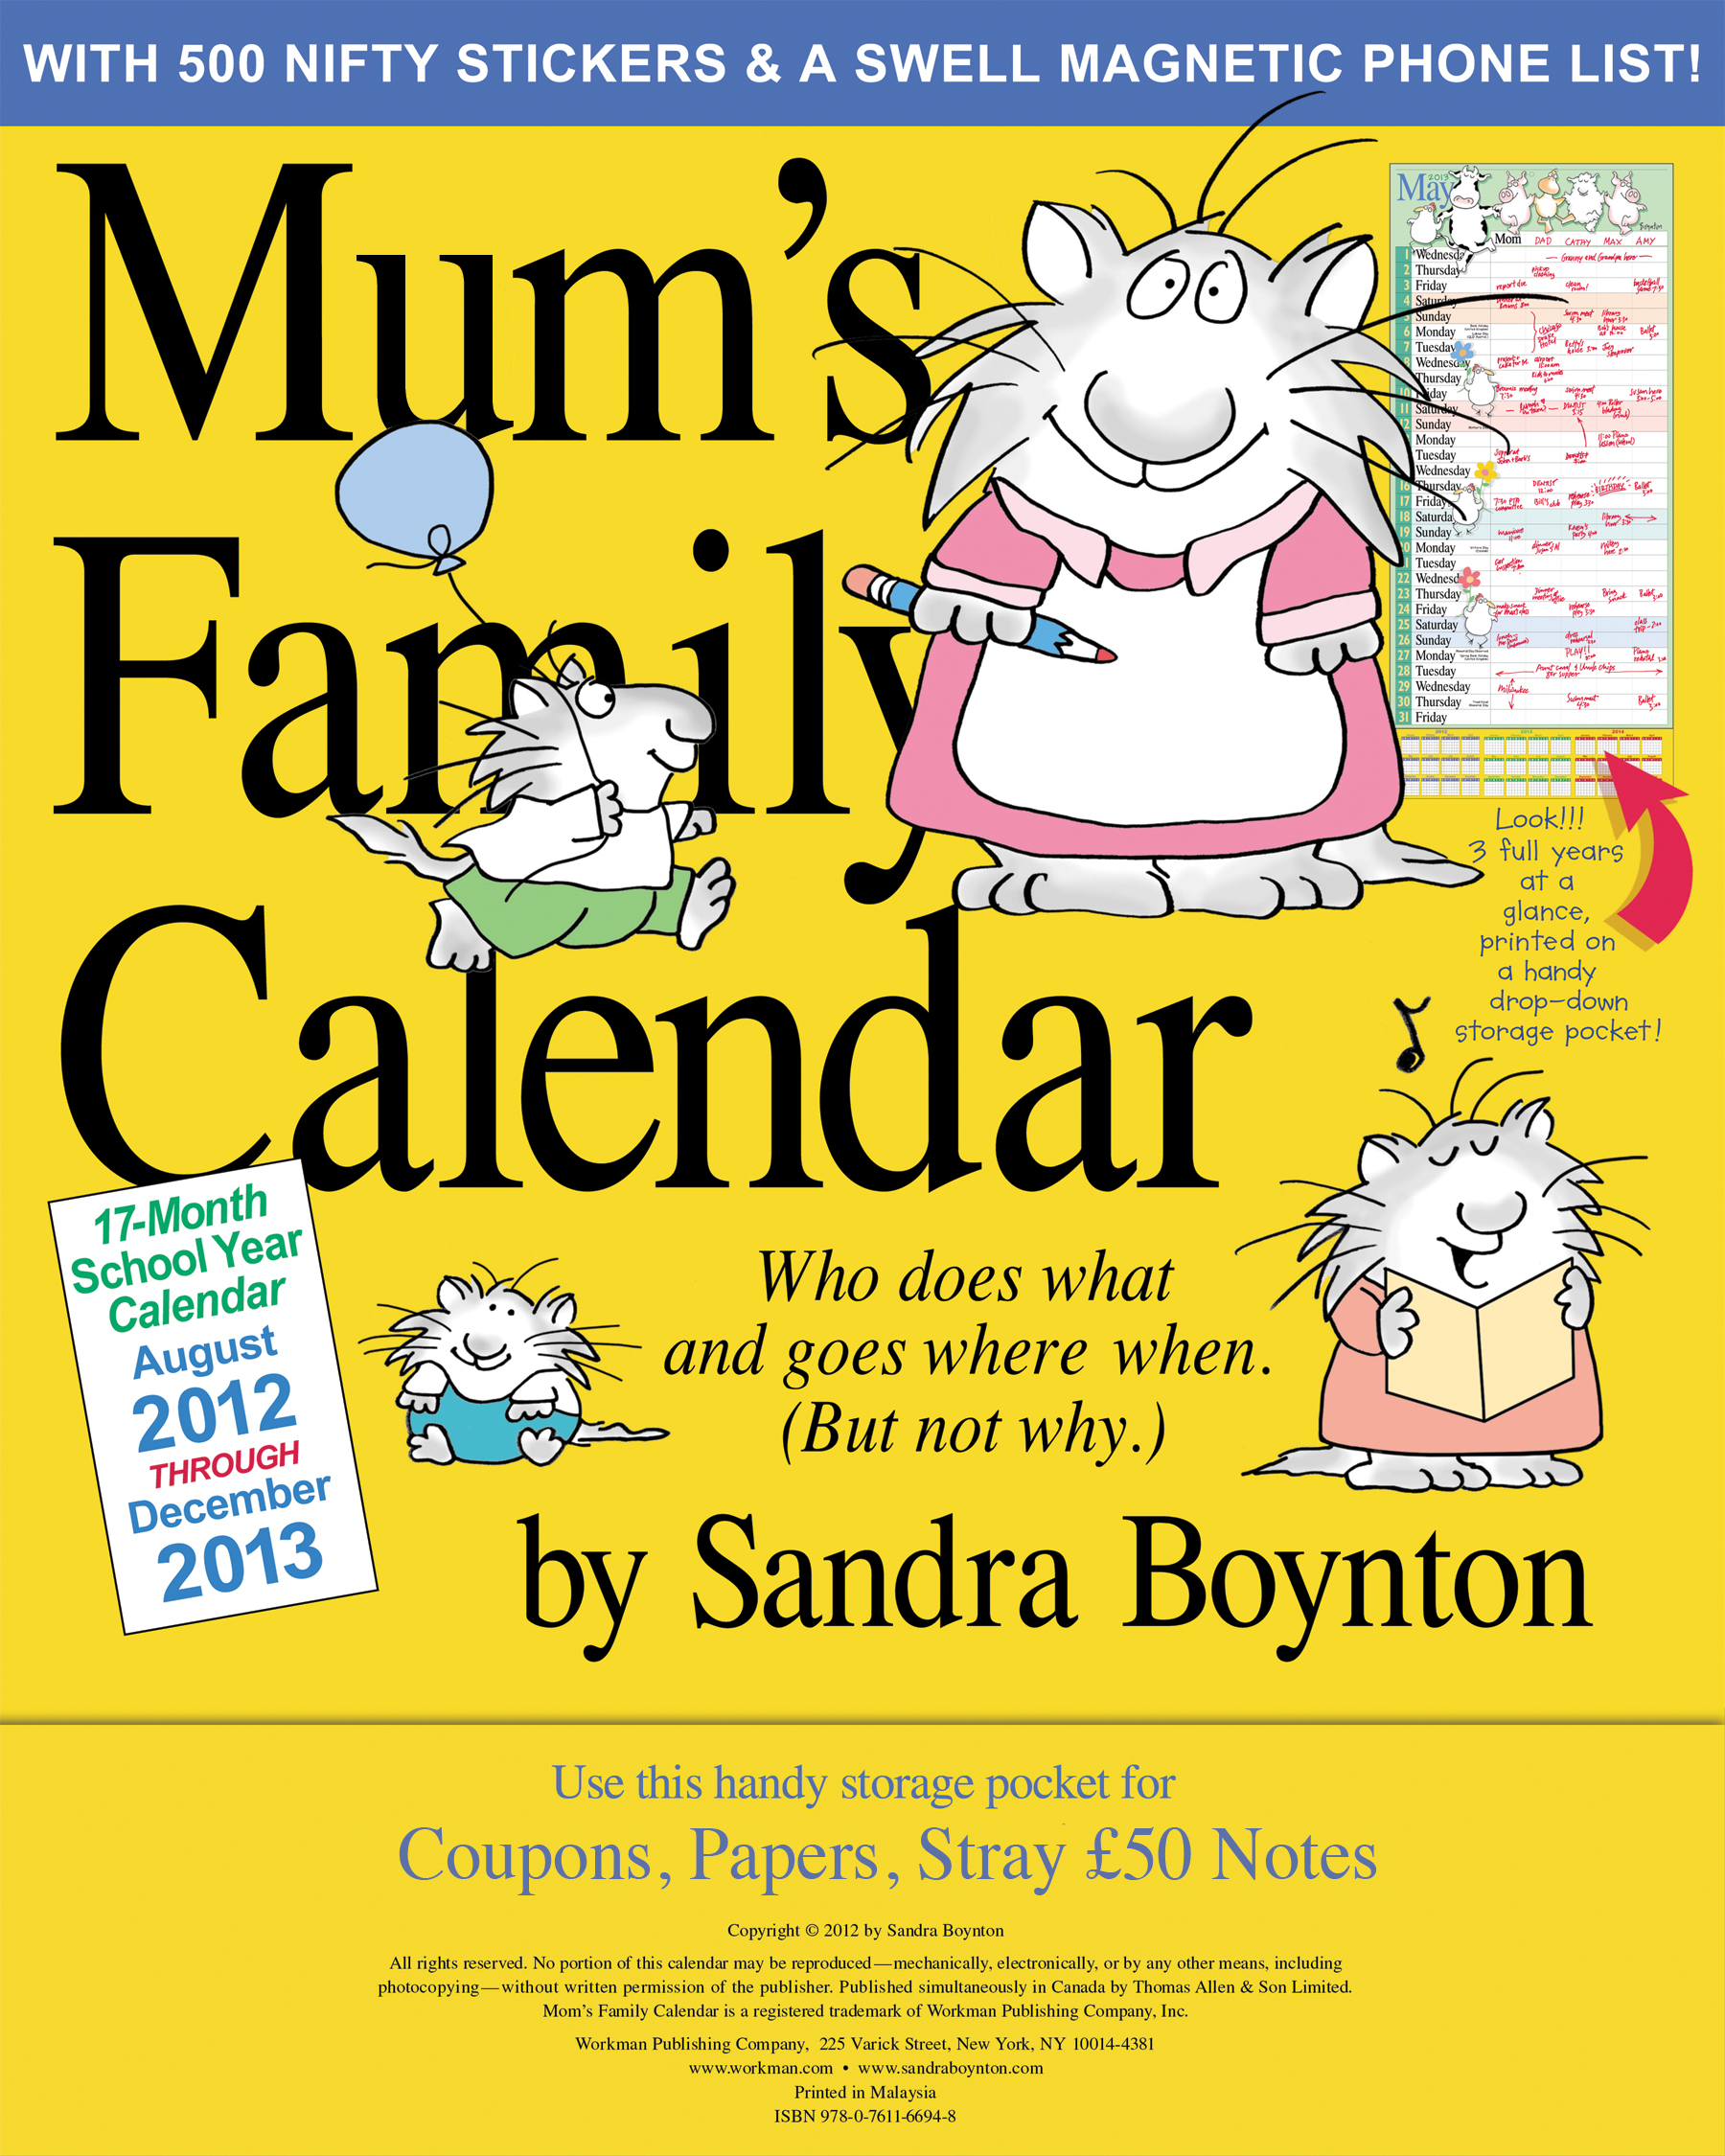 Mum's Family Calendar